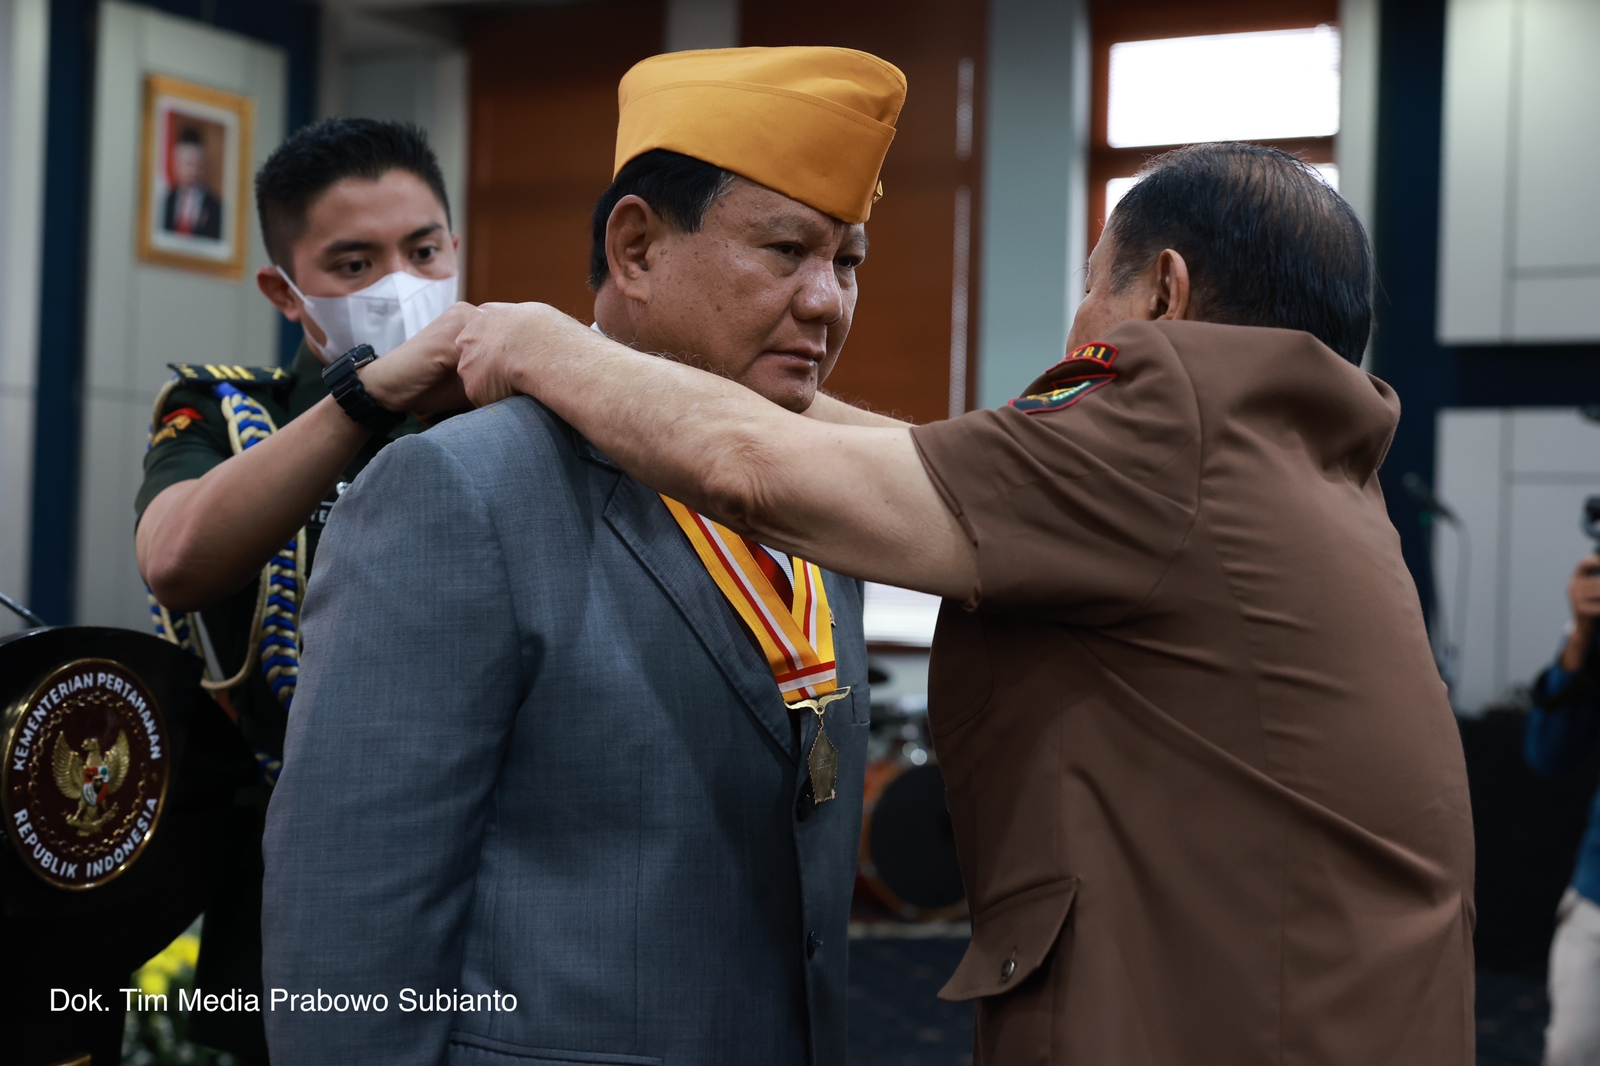 Menhan Pak Bowo Dianugerahi Bintang Legiun Veteran RI pada HUT Ke-66 LVRI (Foto:Tim Prabowo/SinPo.id)